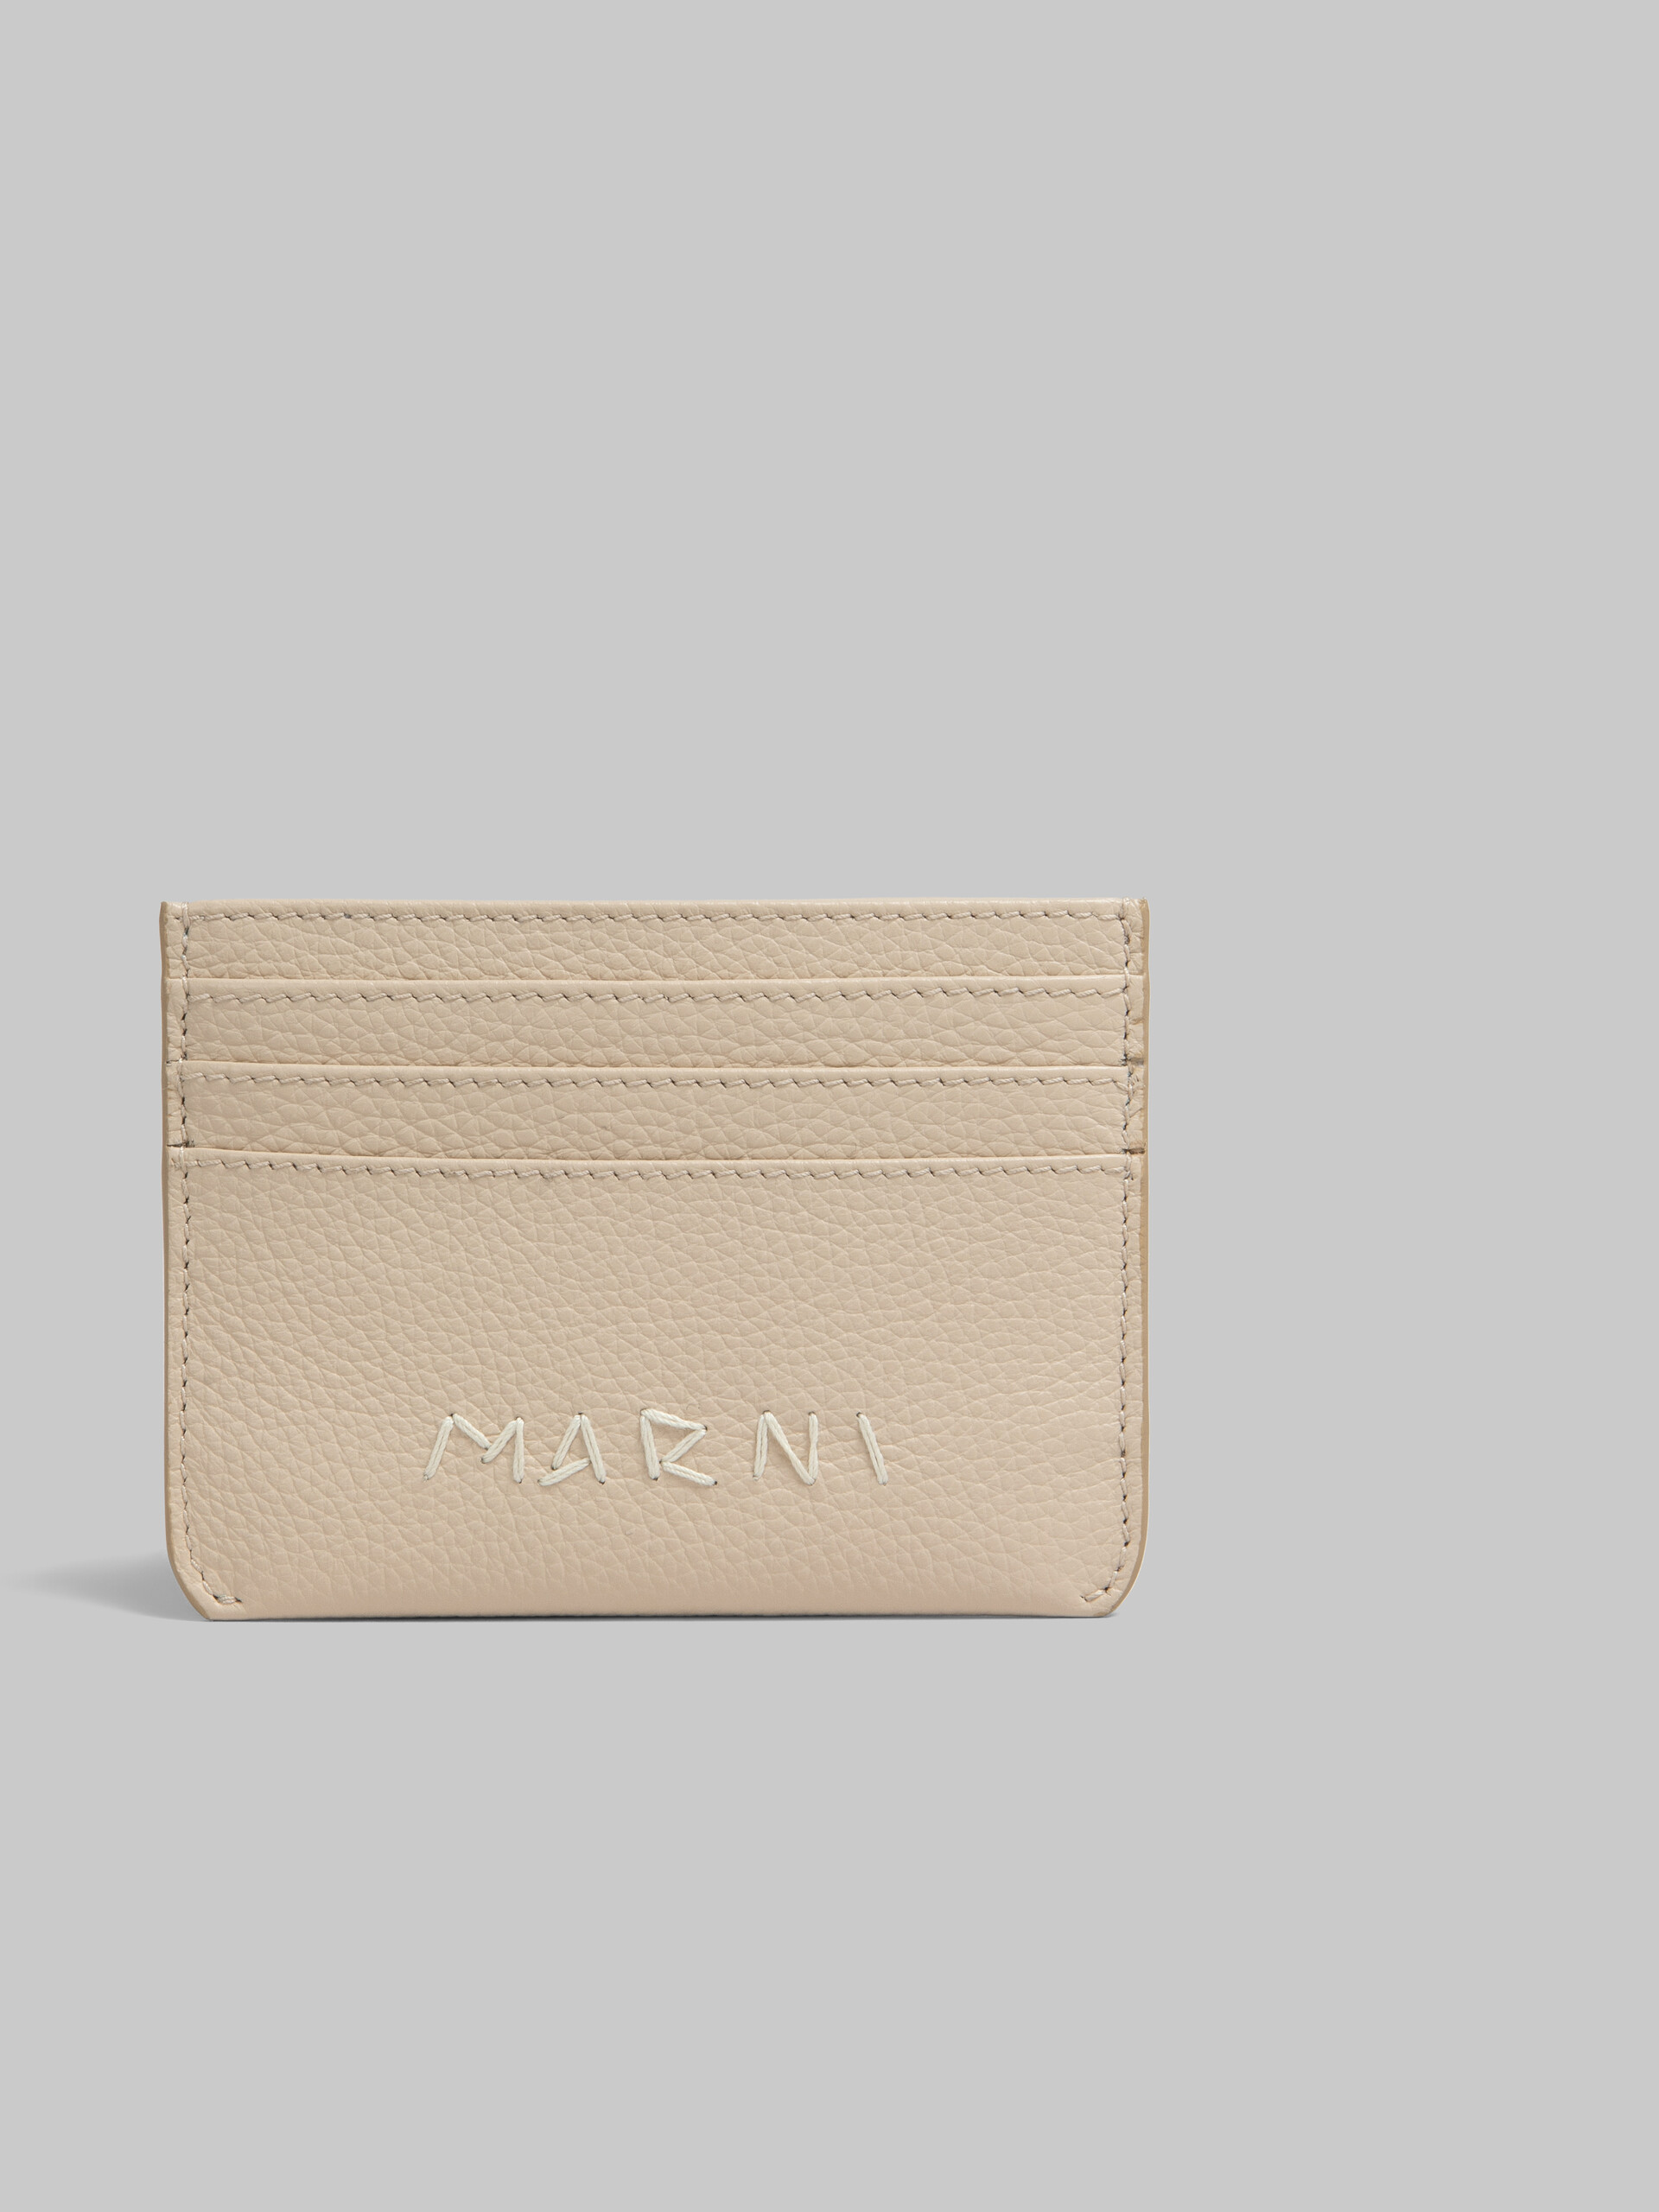 Beige leather cardholder with Marni mending - Wallets - Image 4